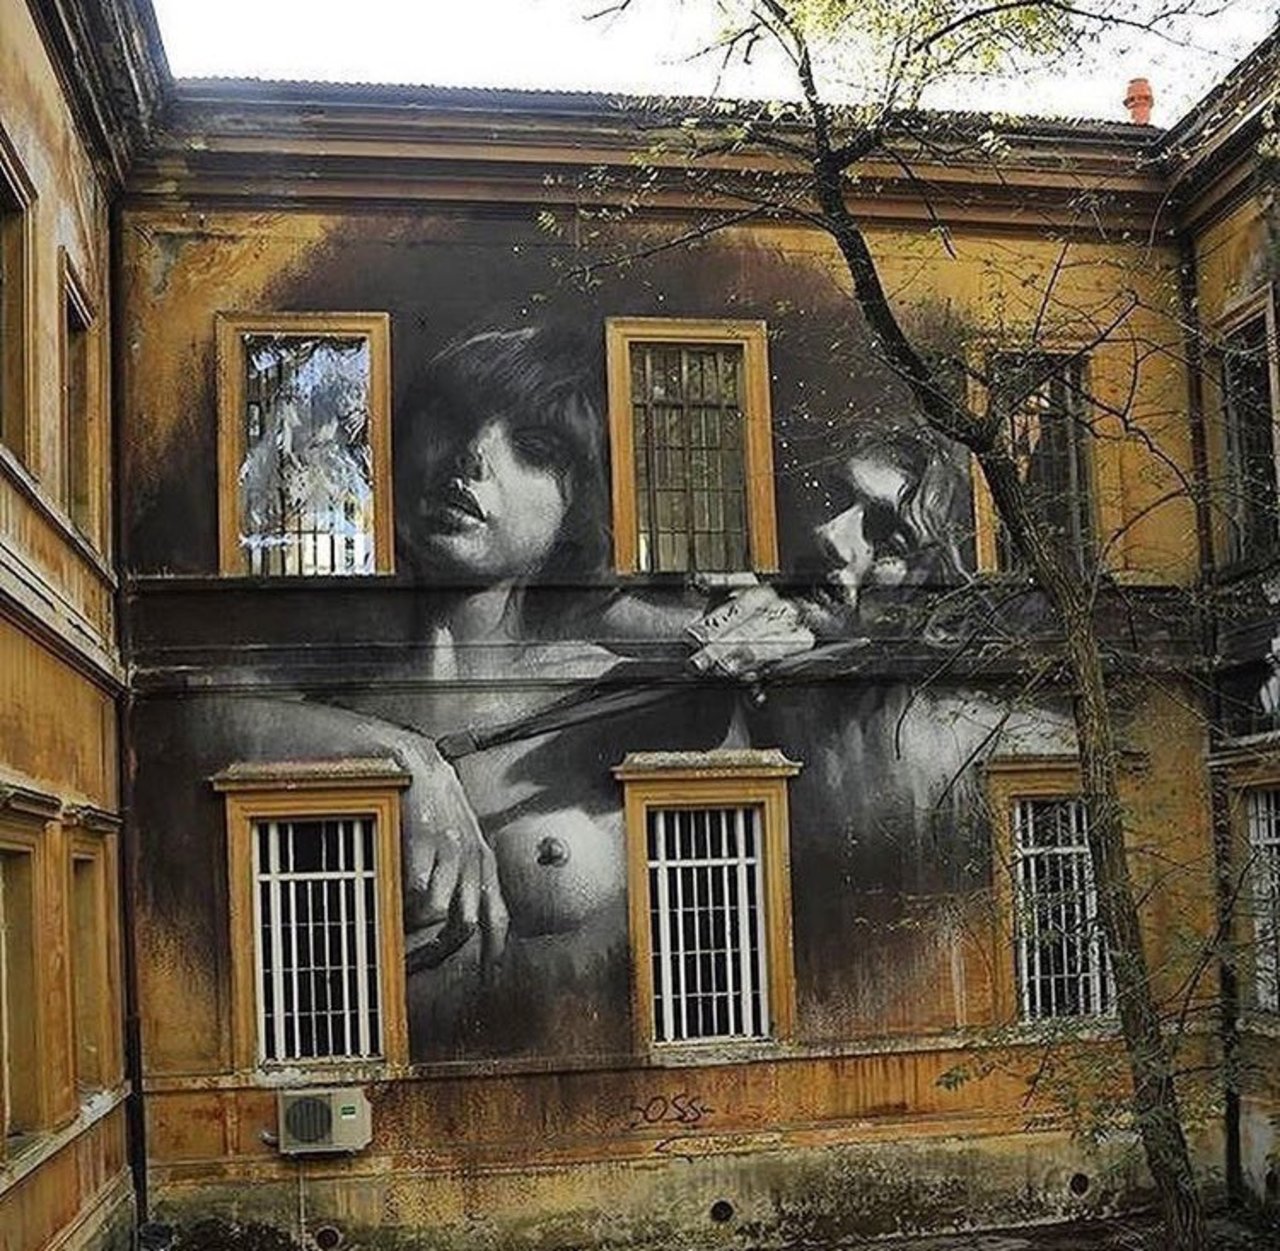 #mural by Gomez #Rome #Italy #streetart #art #graffiti https://t.co/qaTtXvj3lE